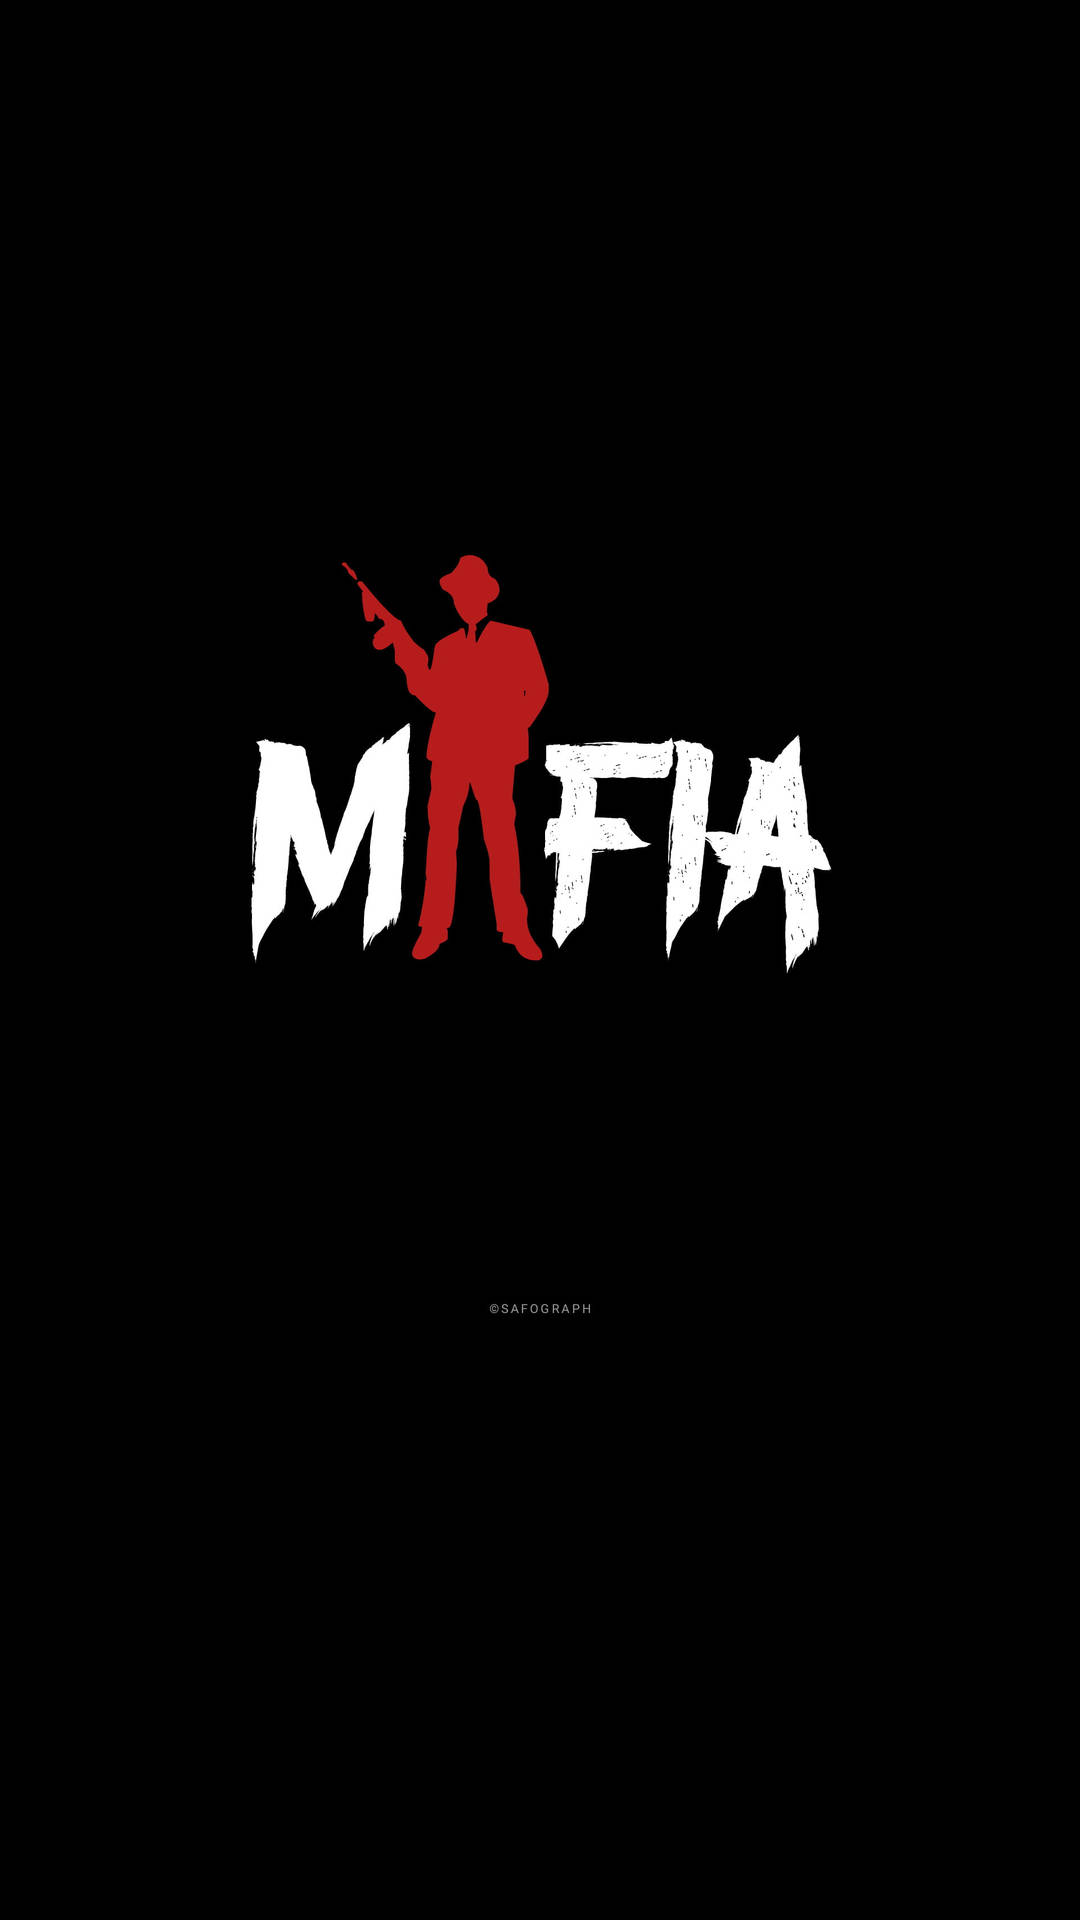 Appealing Mafia-themed Background